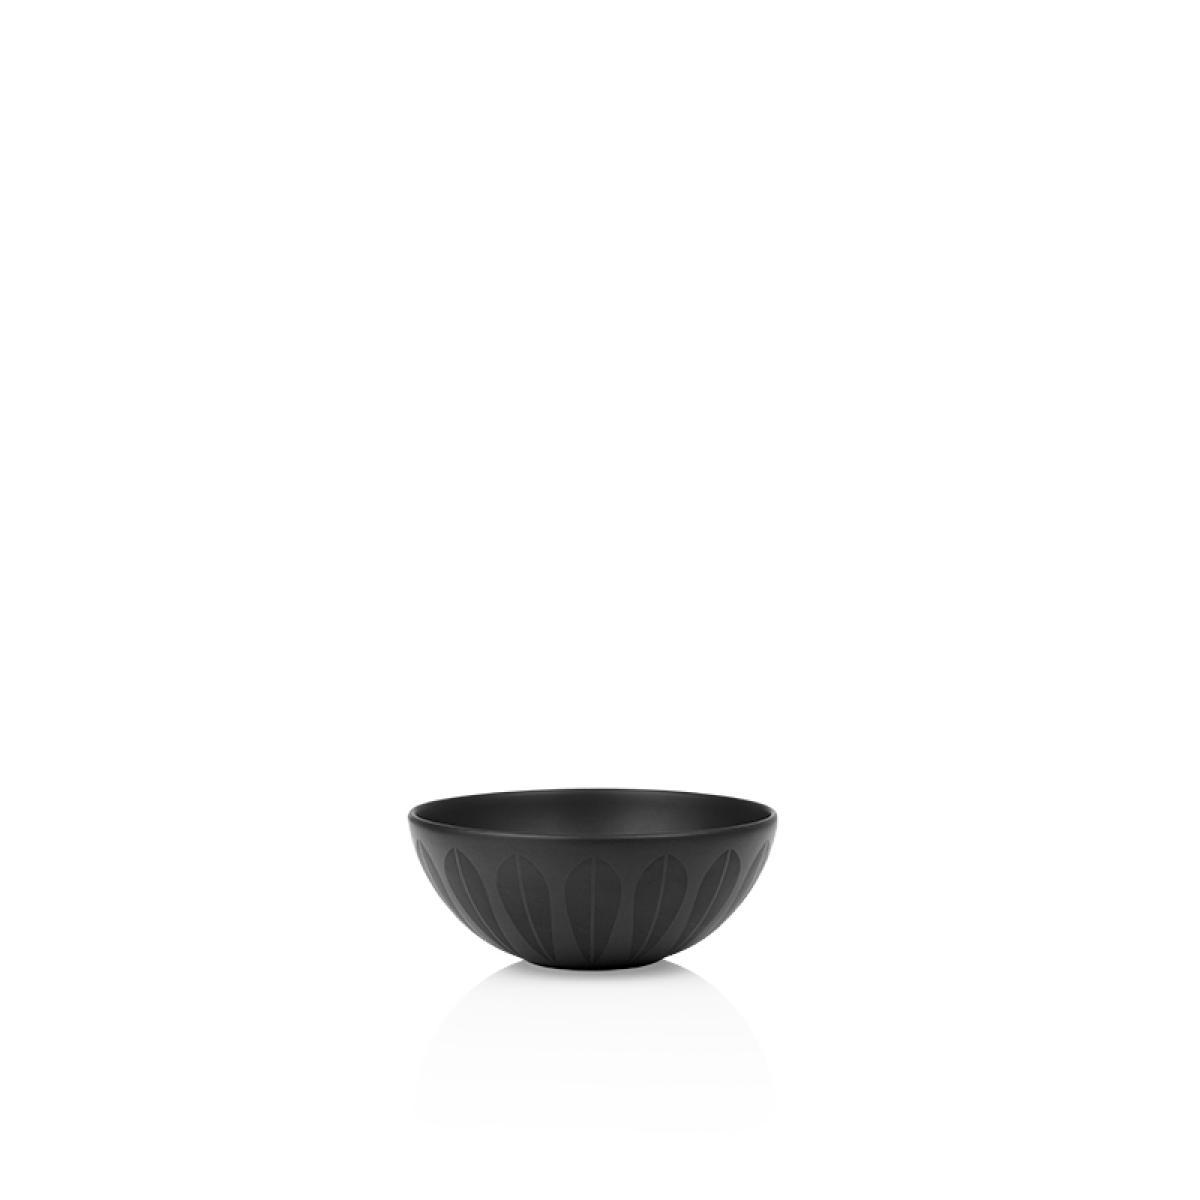 Lucie Kaas Arne Clausen Bowl Negro, 12 cm